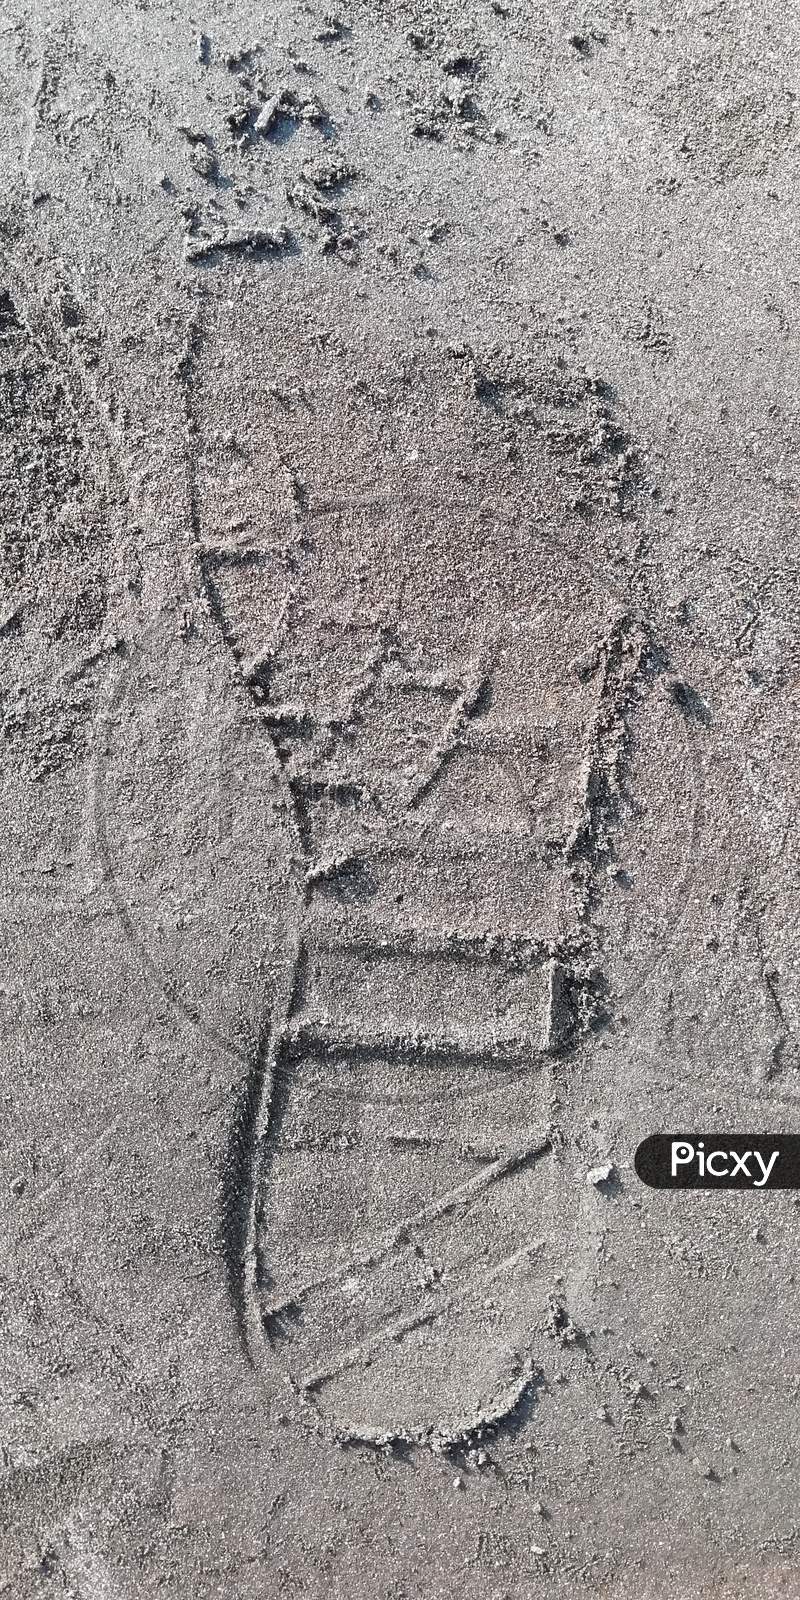 Shoe foot print in sand